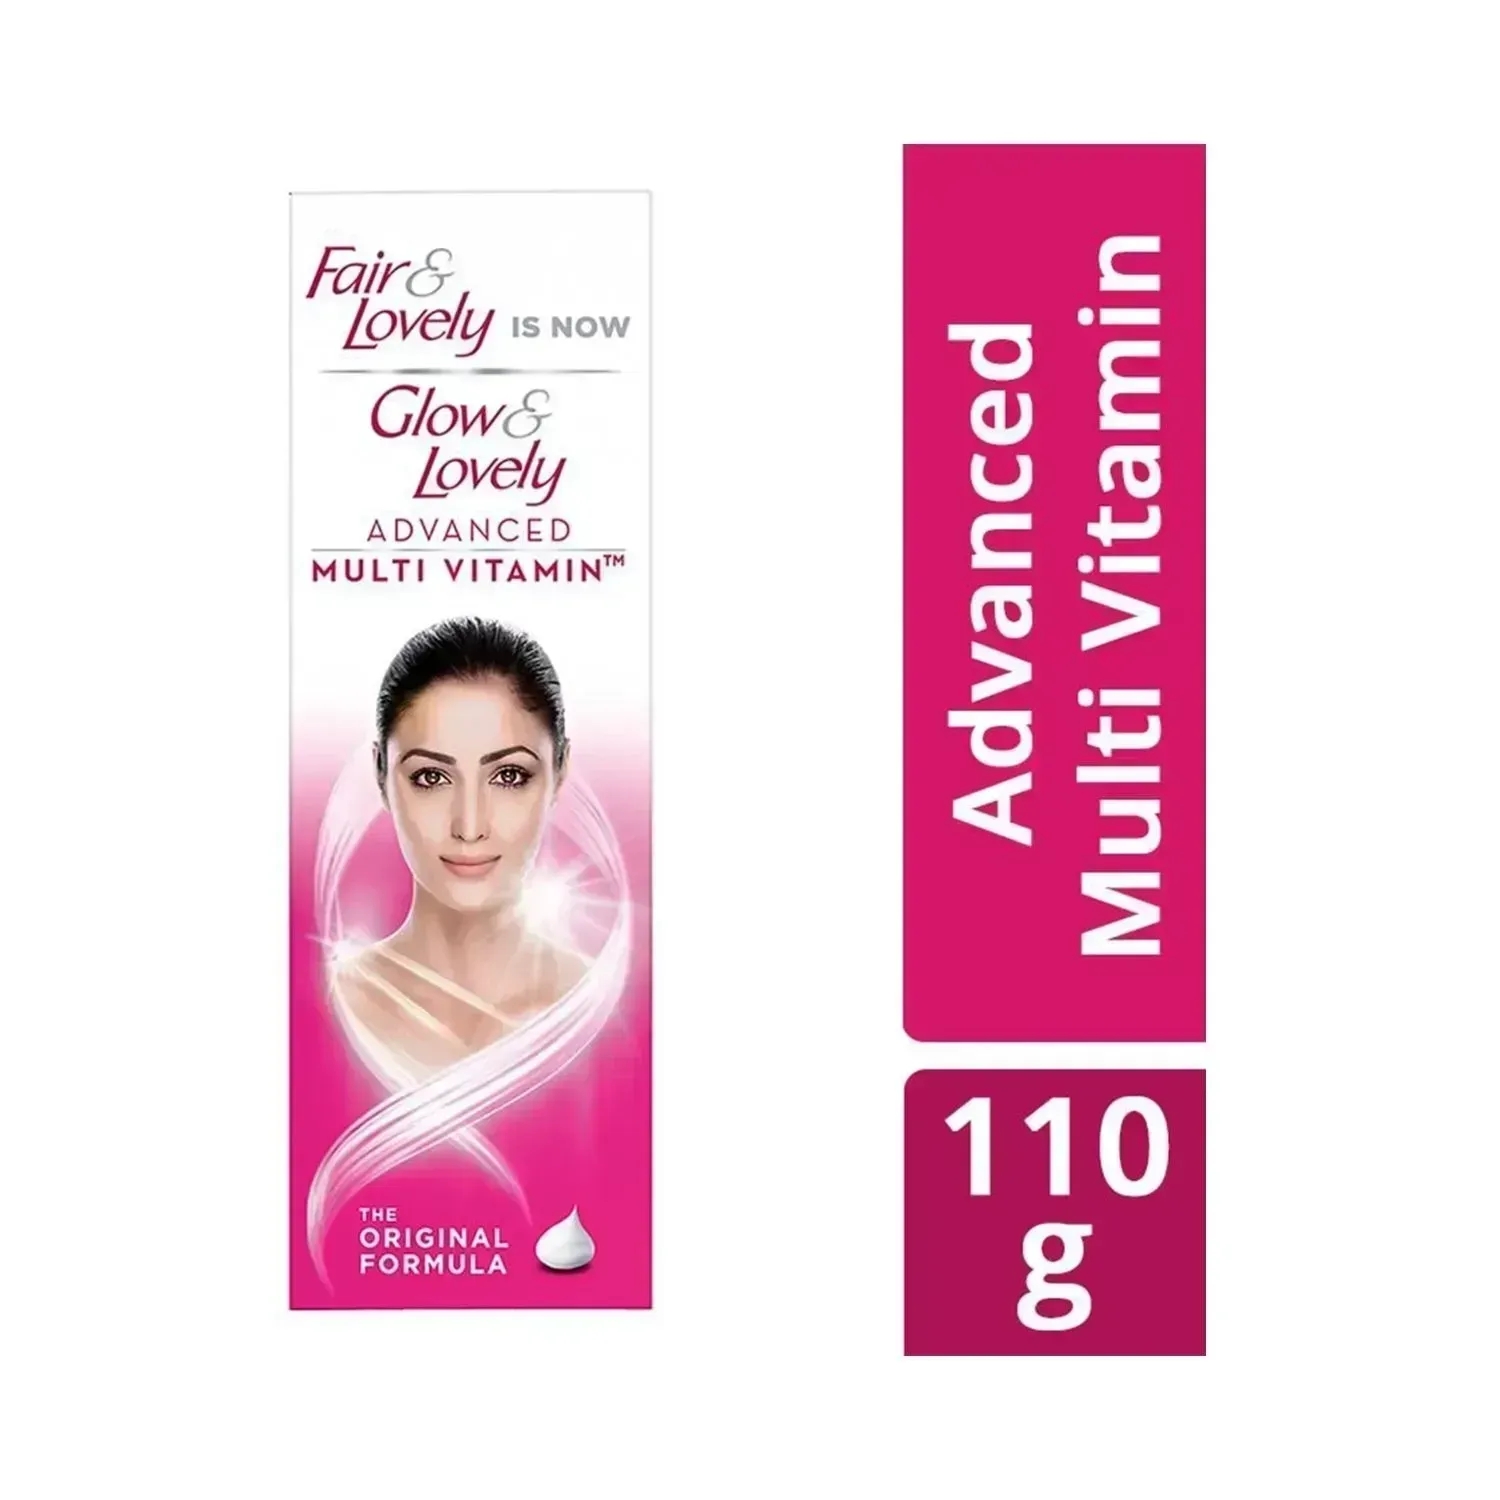 Glow & Lovely | Glow & Lovely Advanced Multivitamin Face Cream (110g)